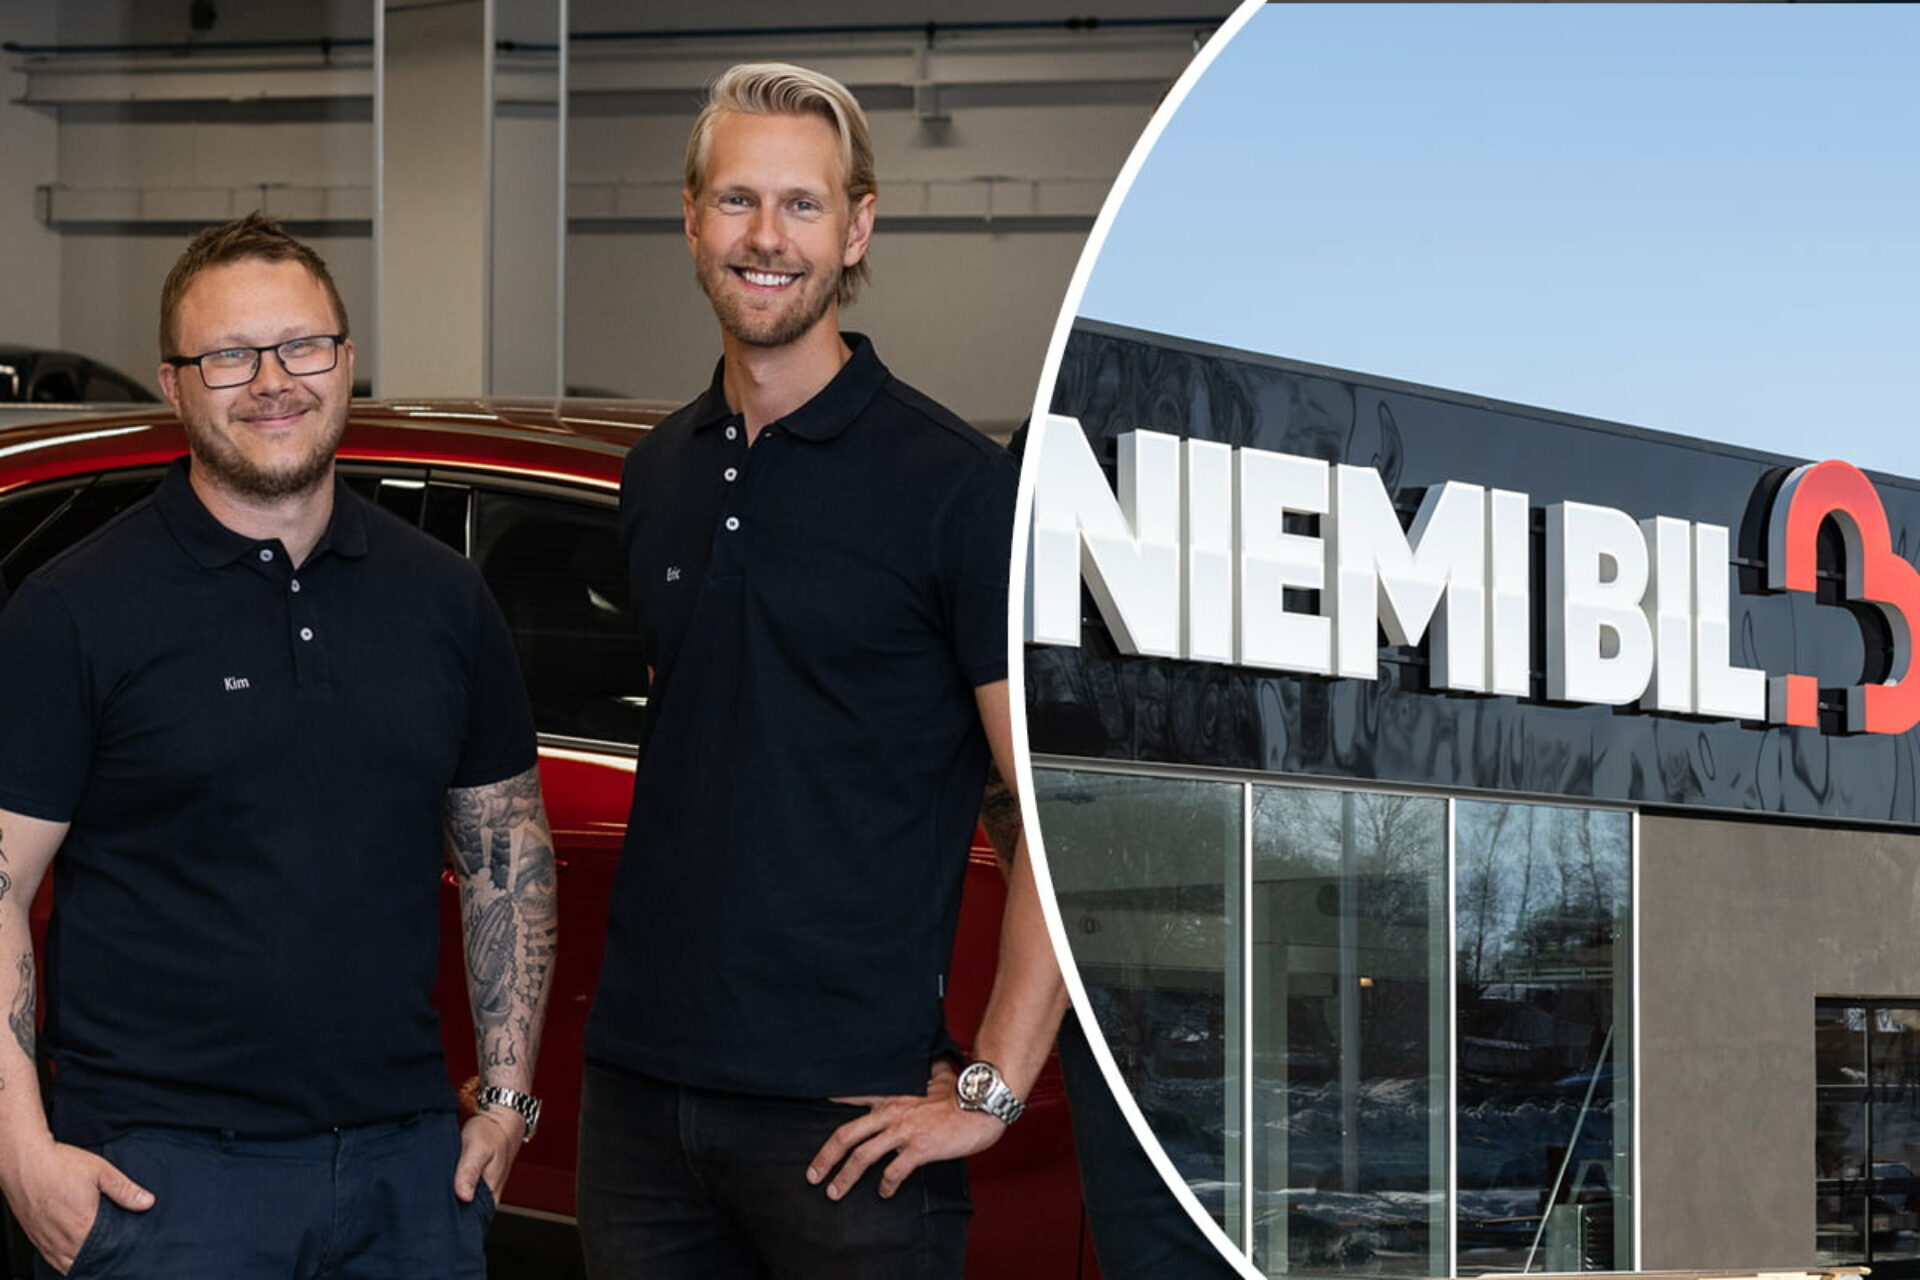 Kim Niemi و Eric Wallin بجوار موقف سيارات Niemi Bil الجديد في Spantgatan 8 في Luleå.